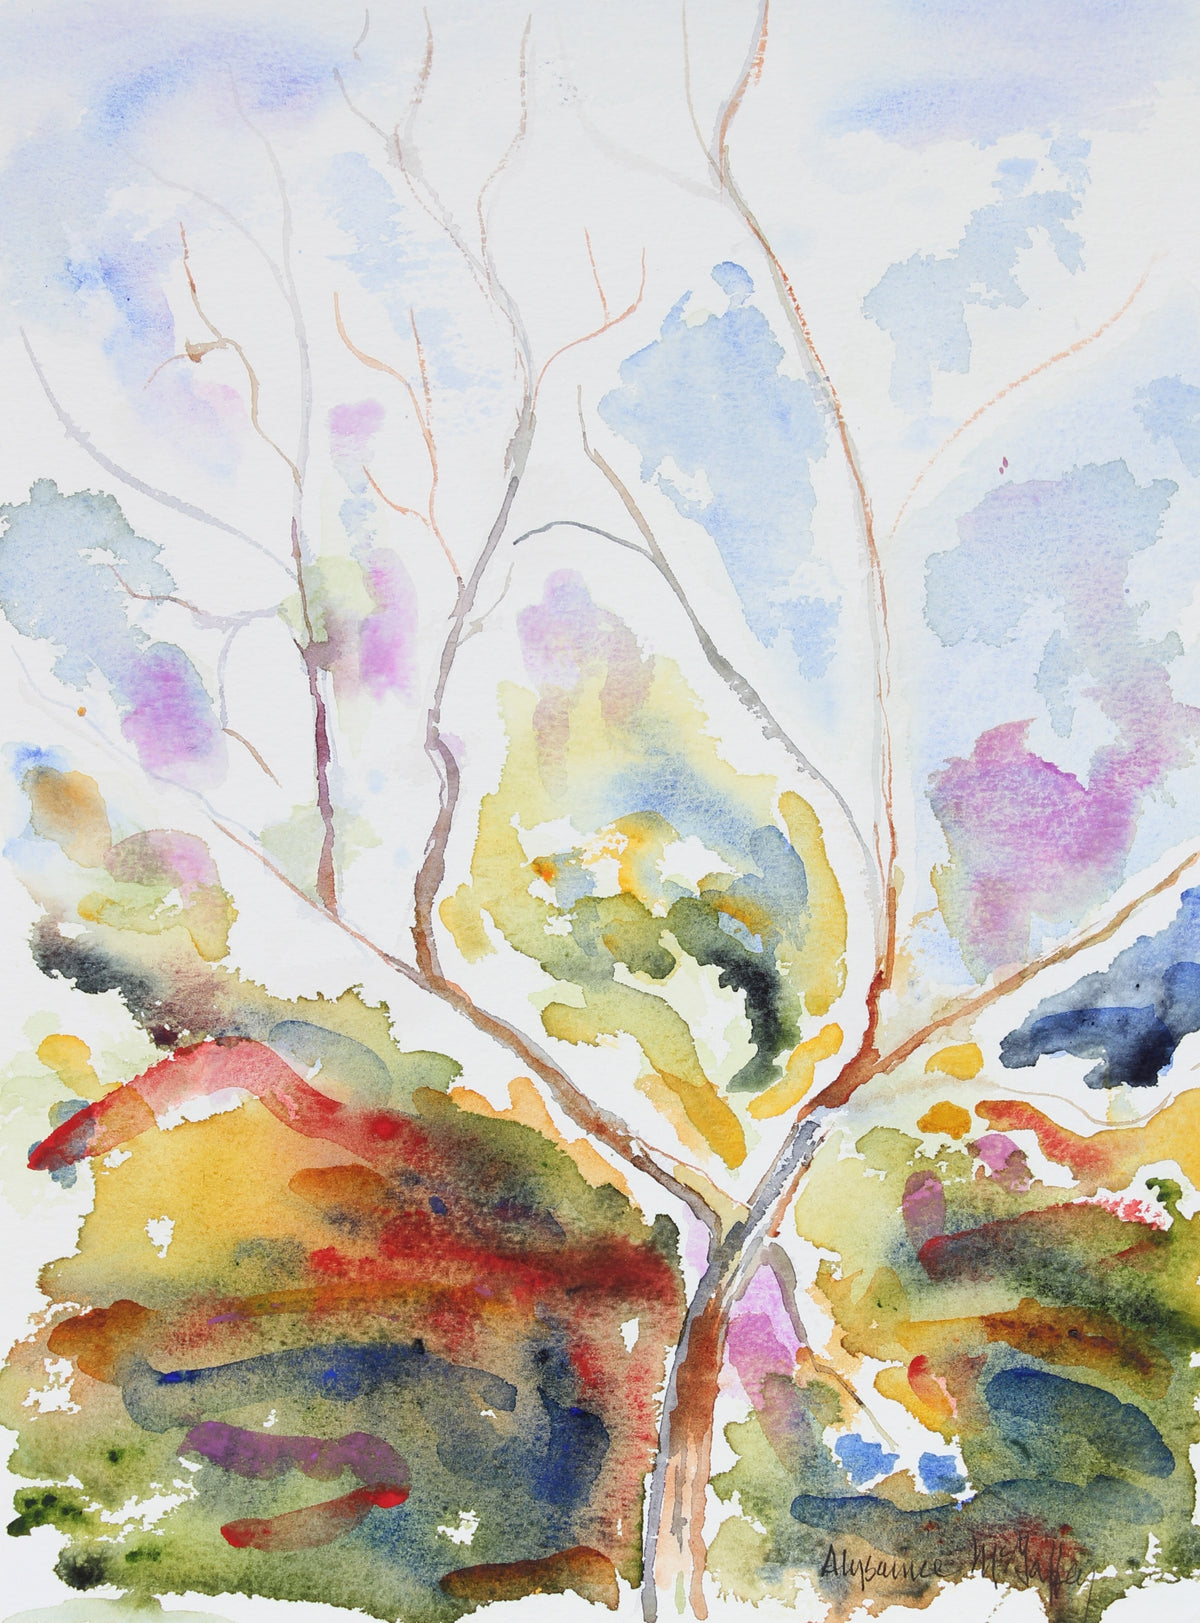 zz- &lt;i&gt;Alder Trees at St. Edmunds Retreat, Pacifica, CA&lt;/i&gt;&lt;br&gt;Late 20th - Early 21st Century Watercolor&lt;br&gt;&lt;br&gt;#43871